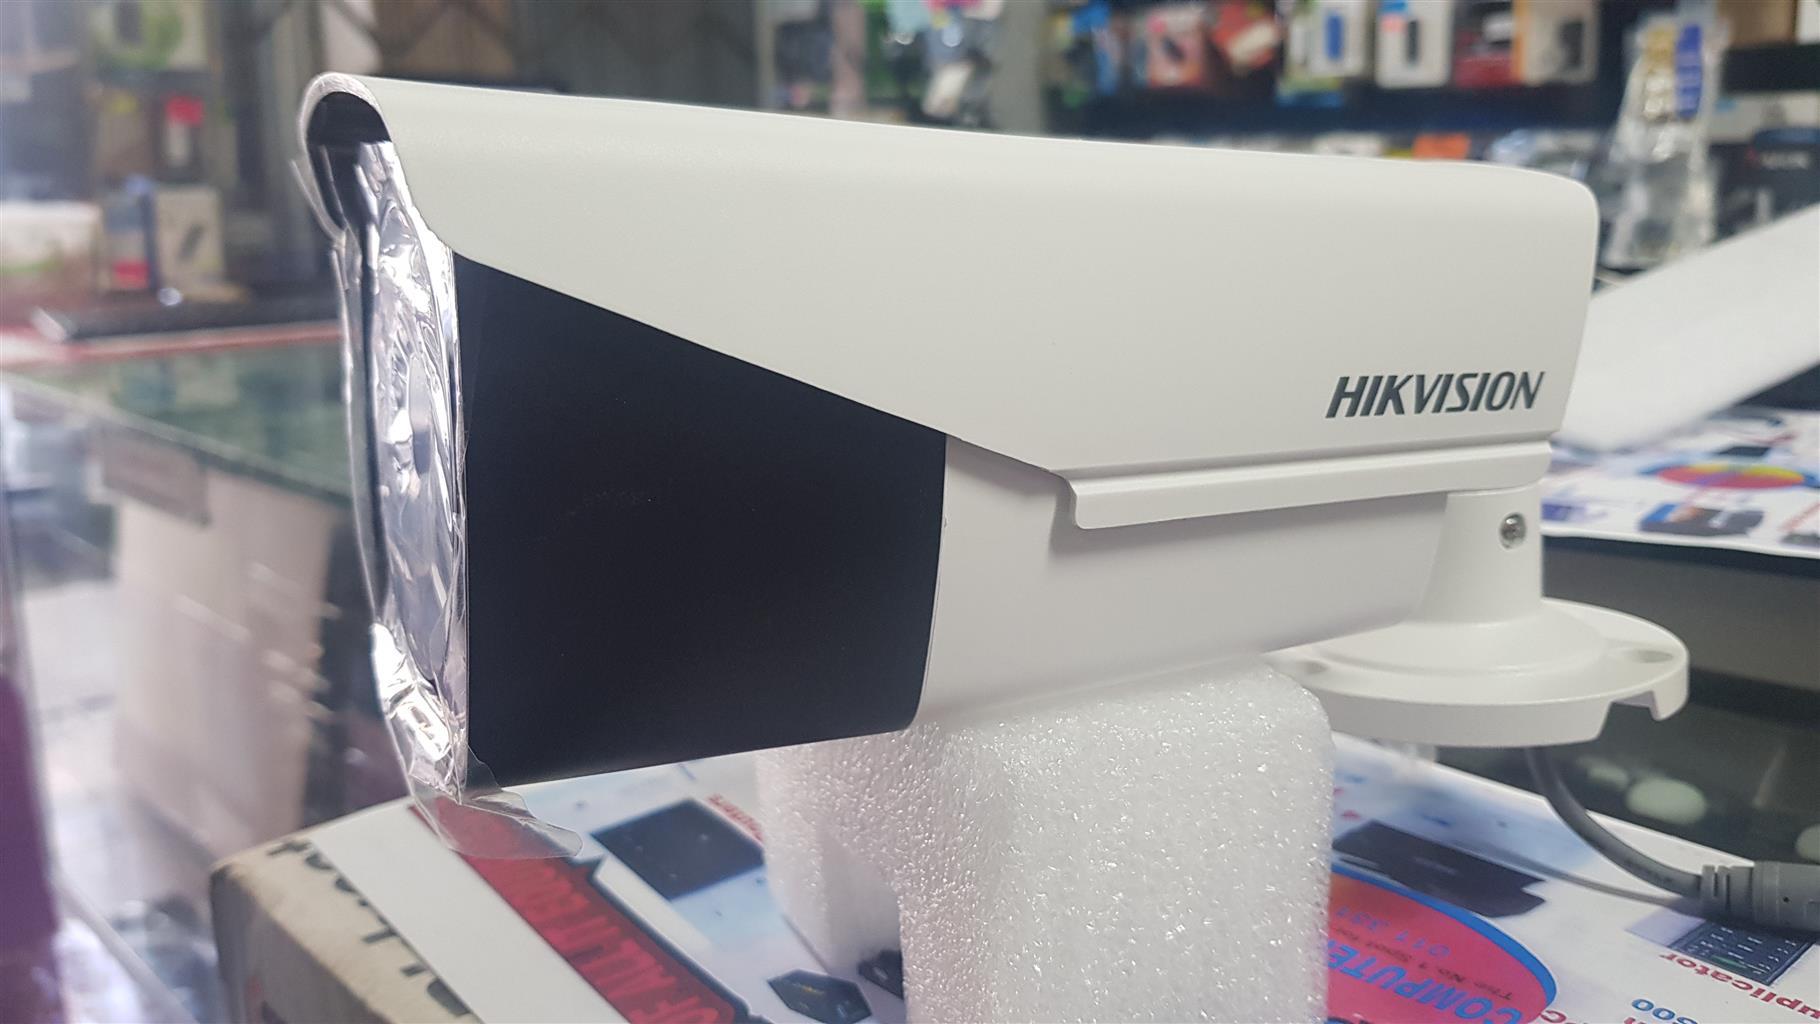 Hikvision DS-2CE16D0T-VFIR3F 1080P IR Bullet Camera.